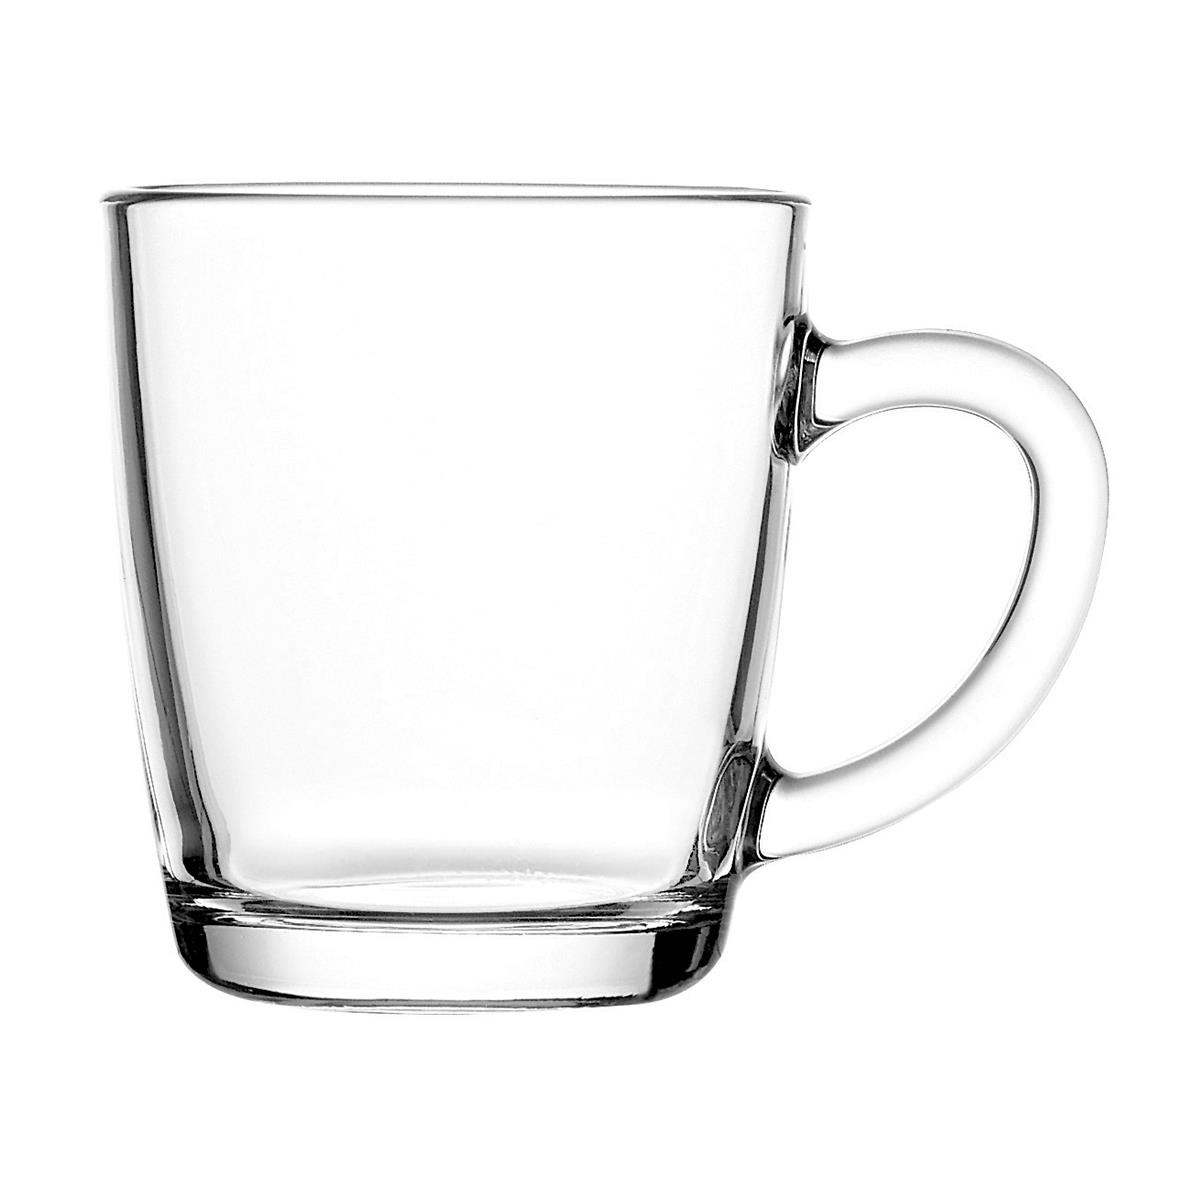 32cl Customized Tea Glass - Darwen